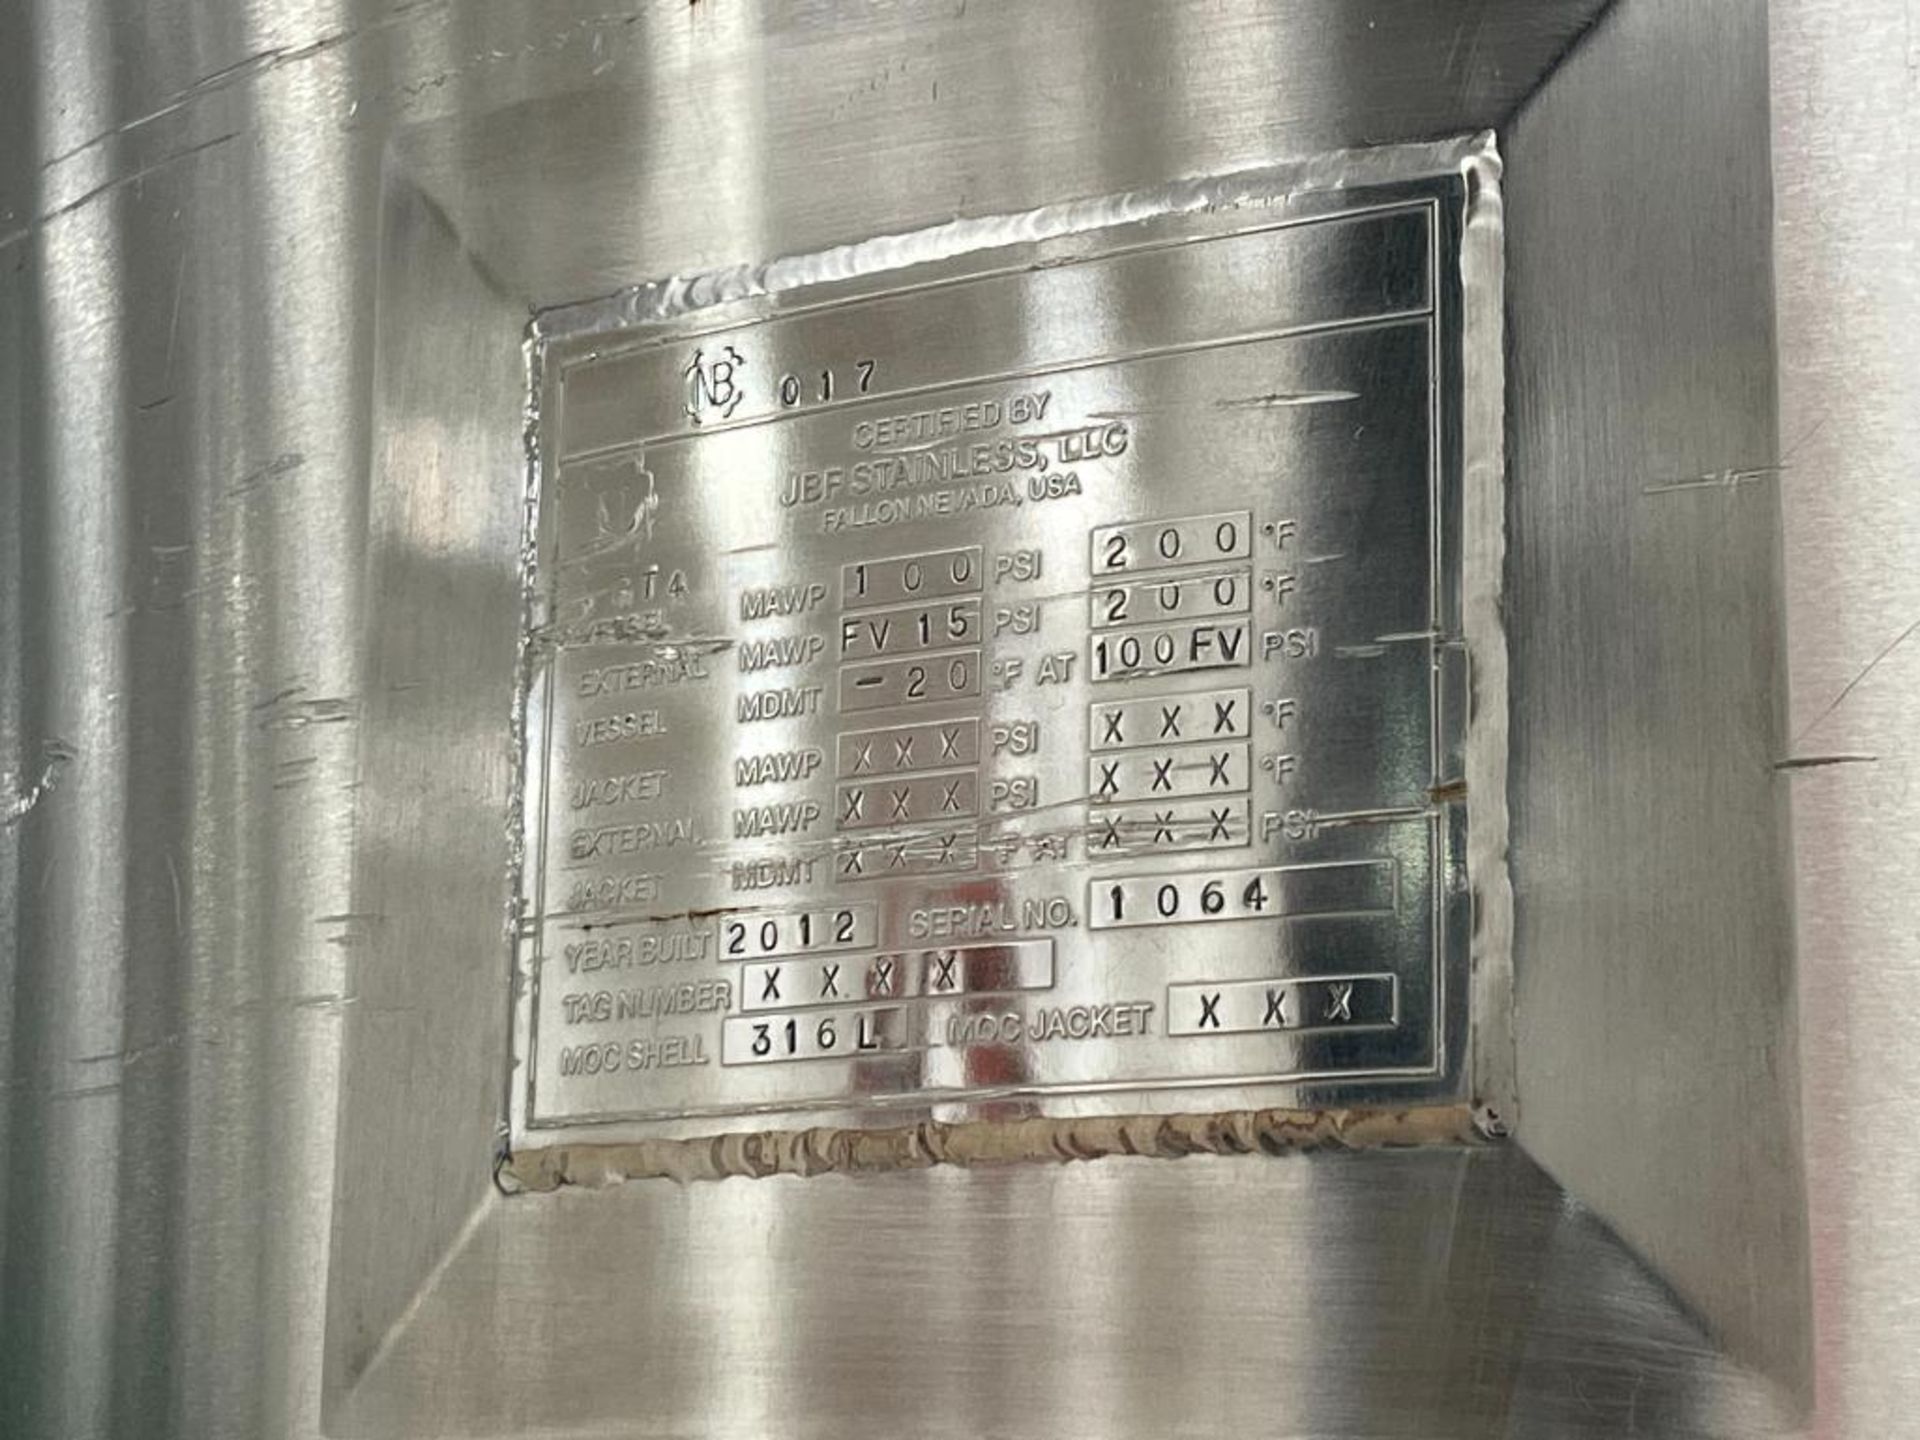 JBF 316L Stainless Steel Pressure Tank, Aproximate 1000 Liter National Board #017 Seriel #: 1064 (Bu - Image 6 of 8